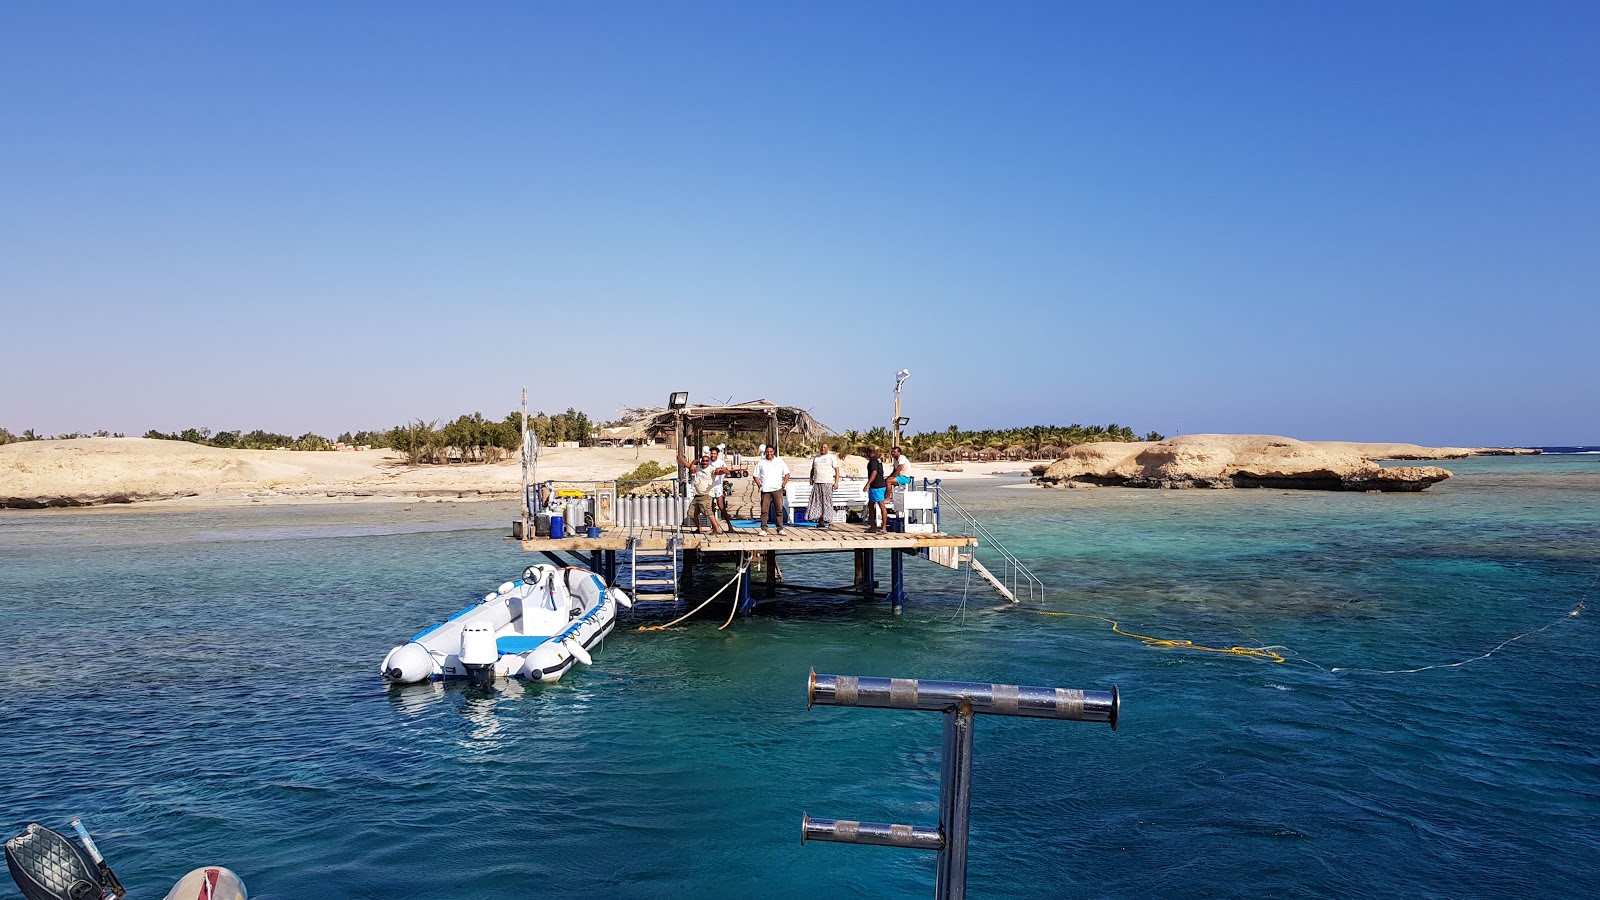 Fotografie cu Mangrove Bay Resort - locul popular printre cunoscătorii de relaxare